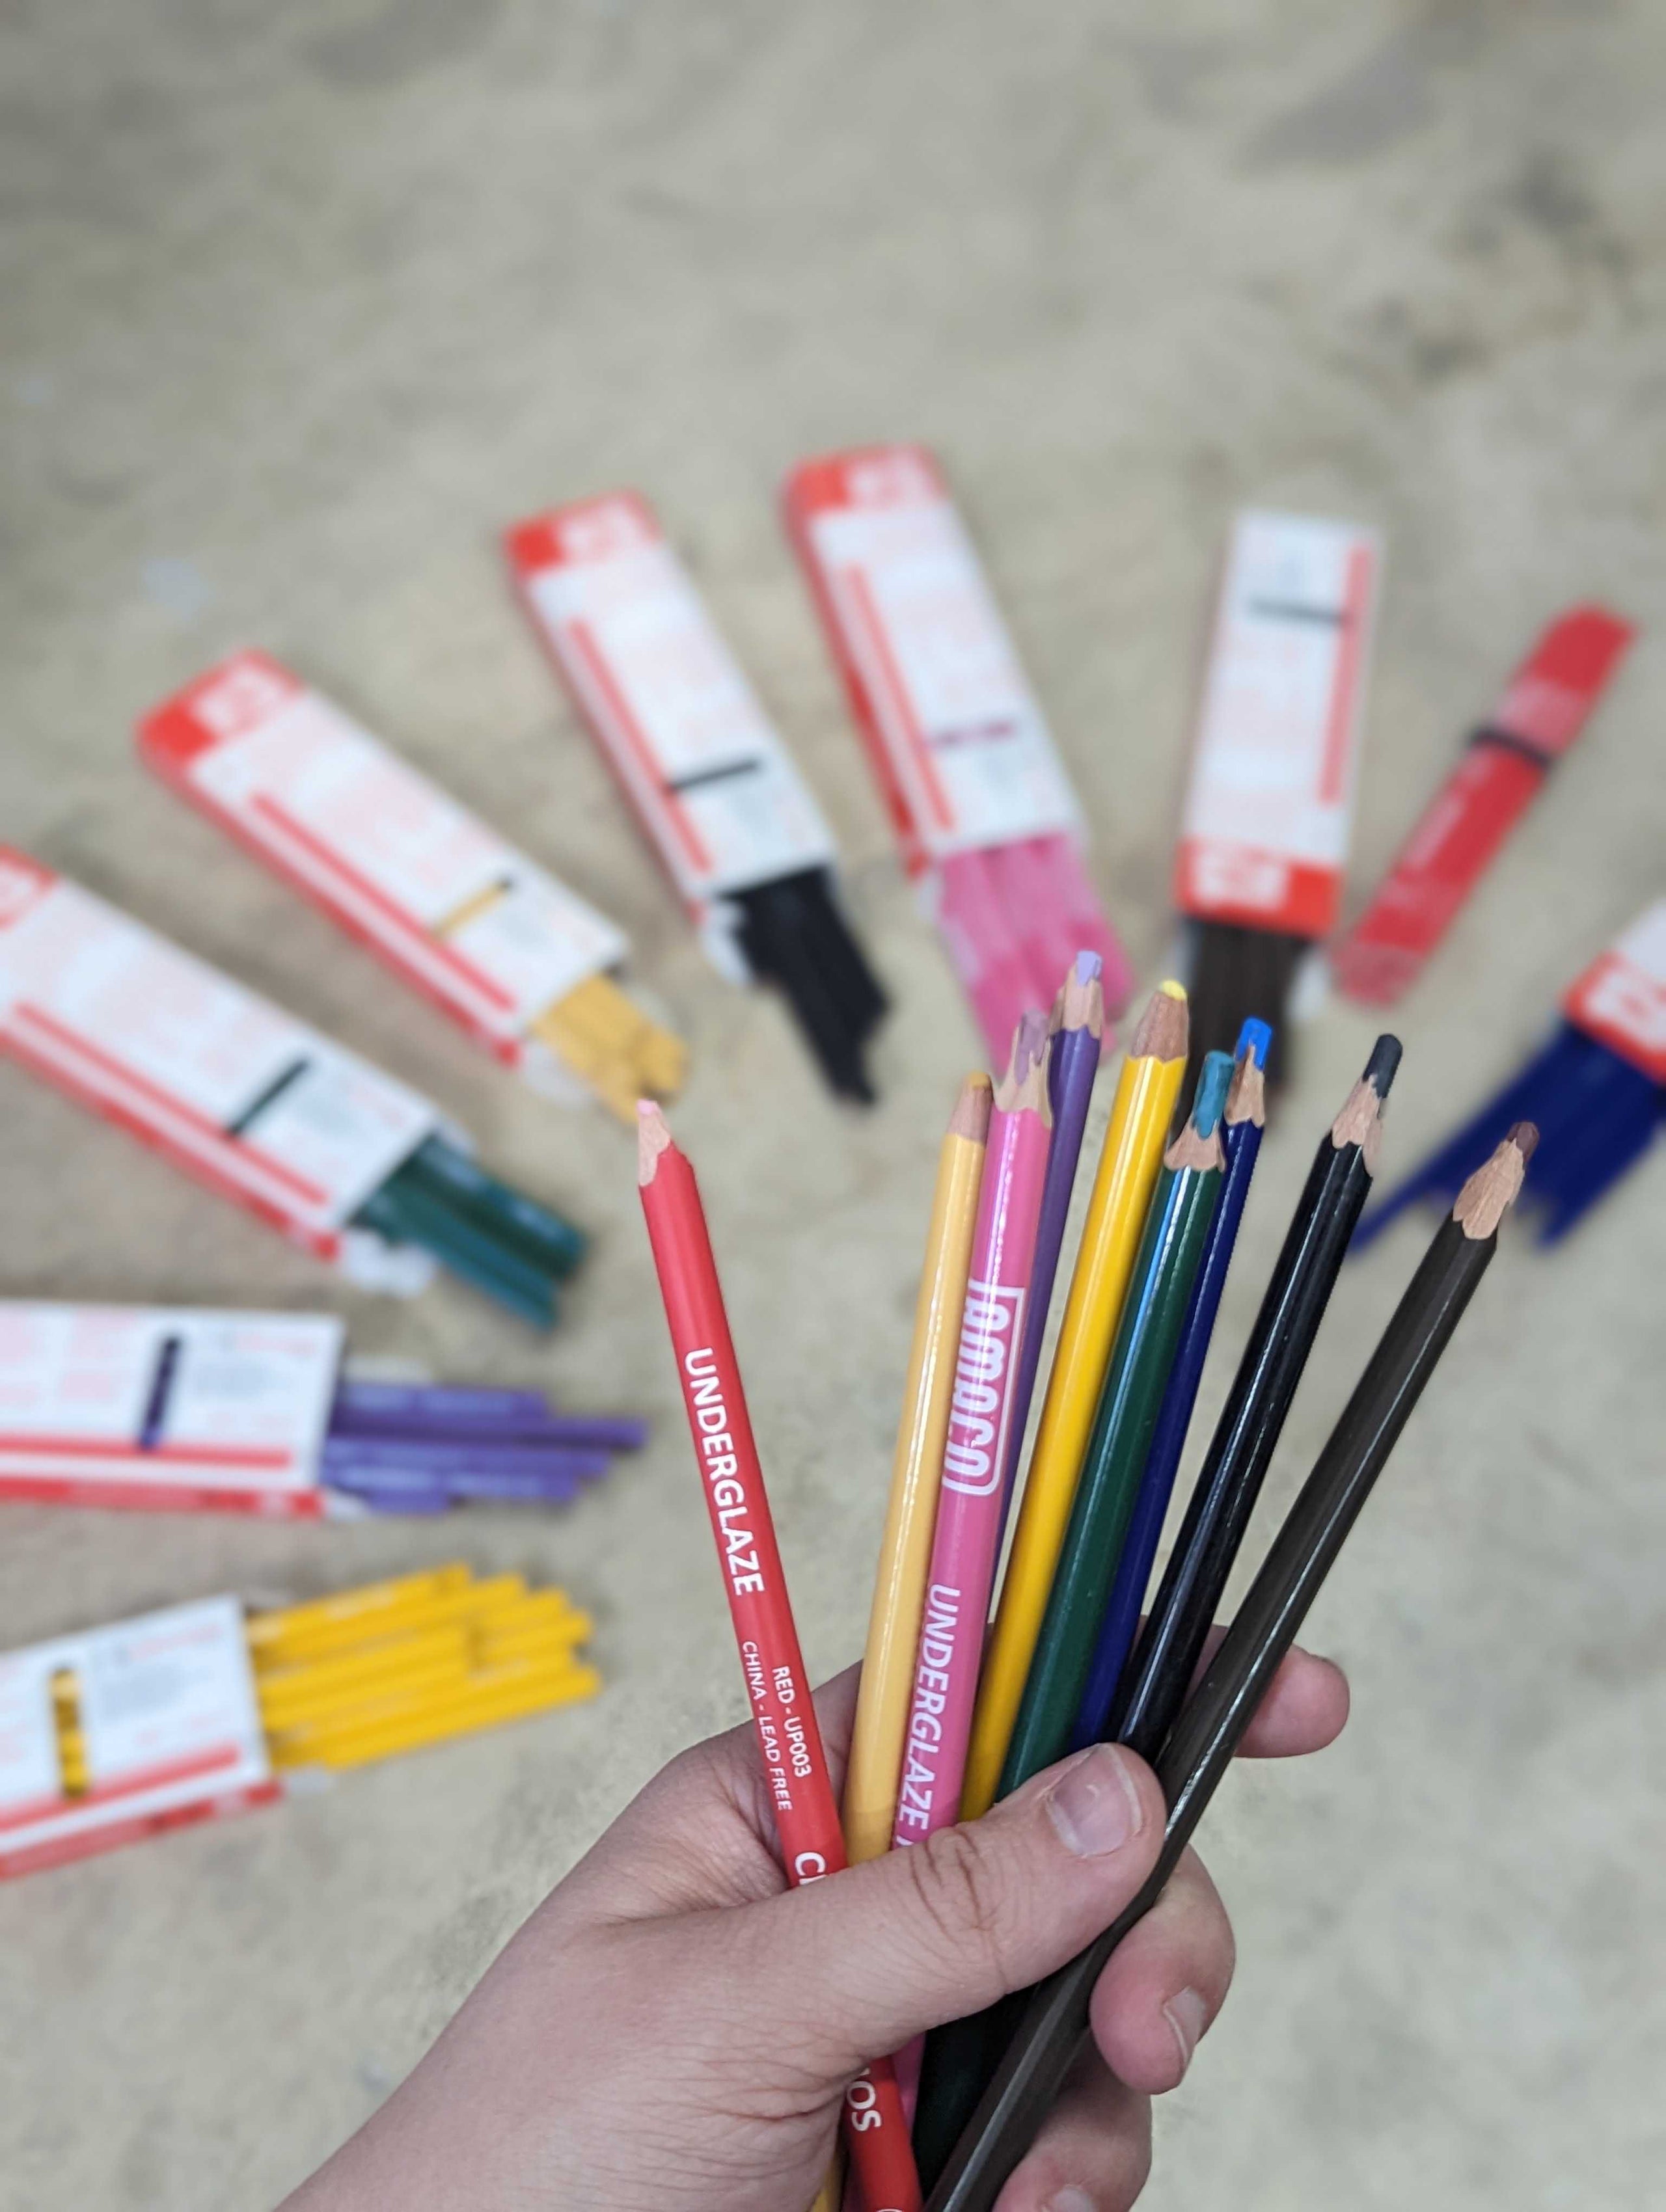 Underglaze Pencils and other Pencils